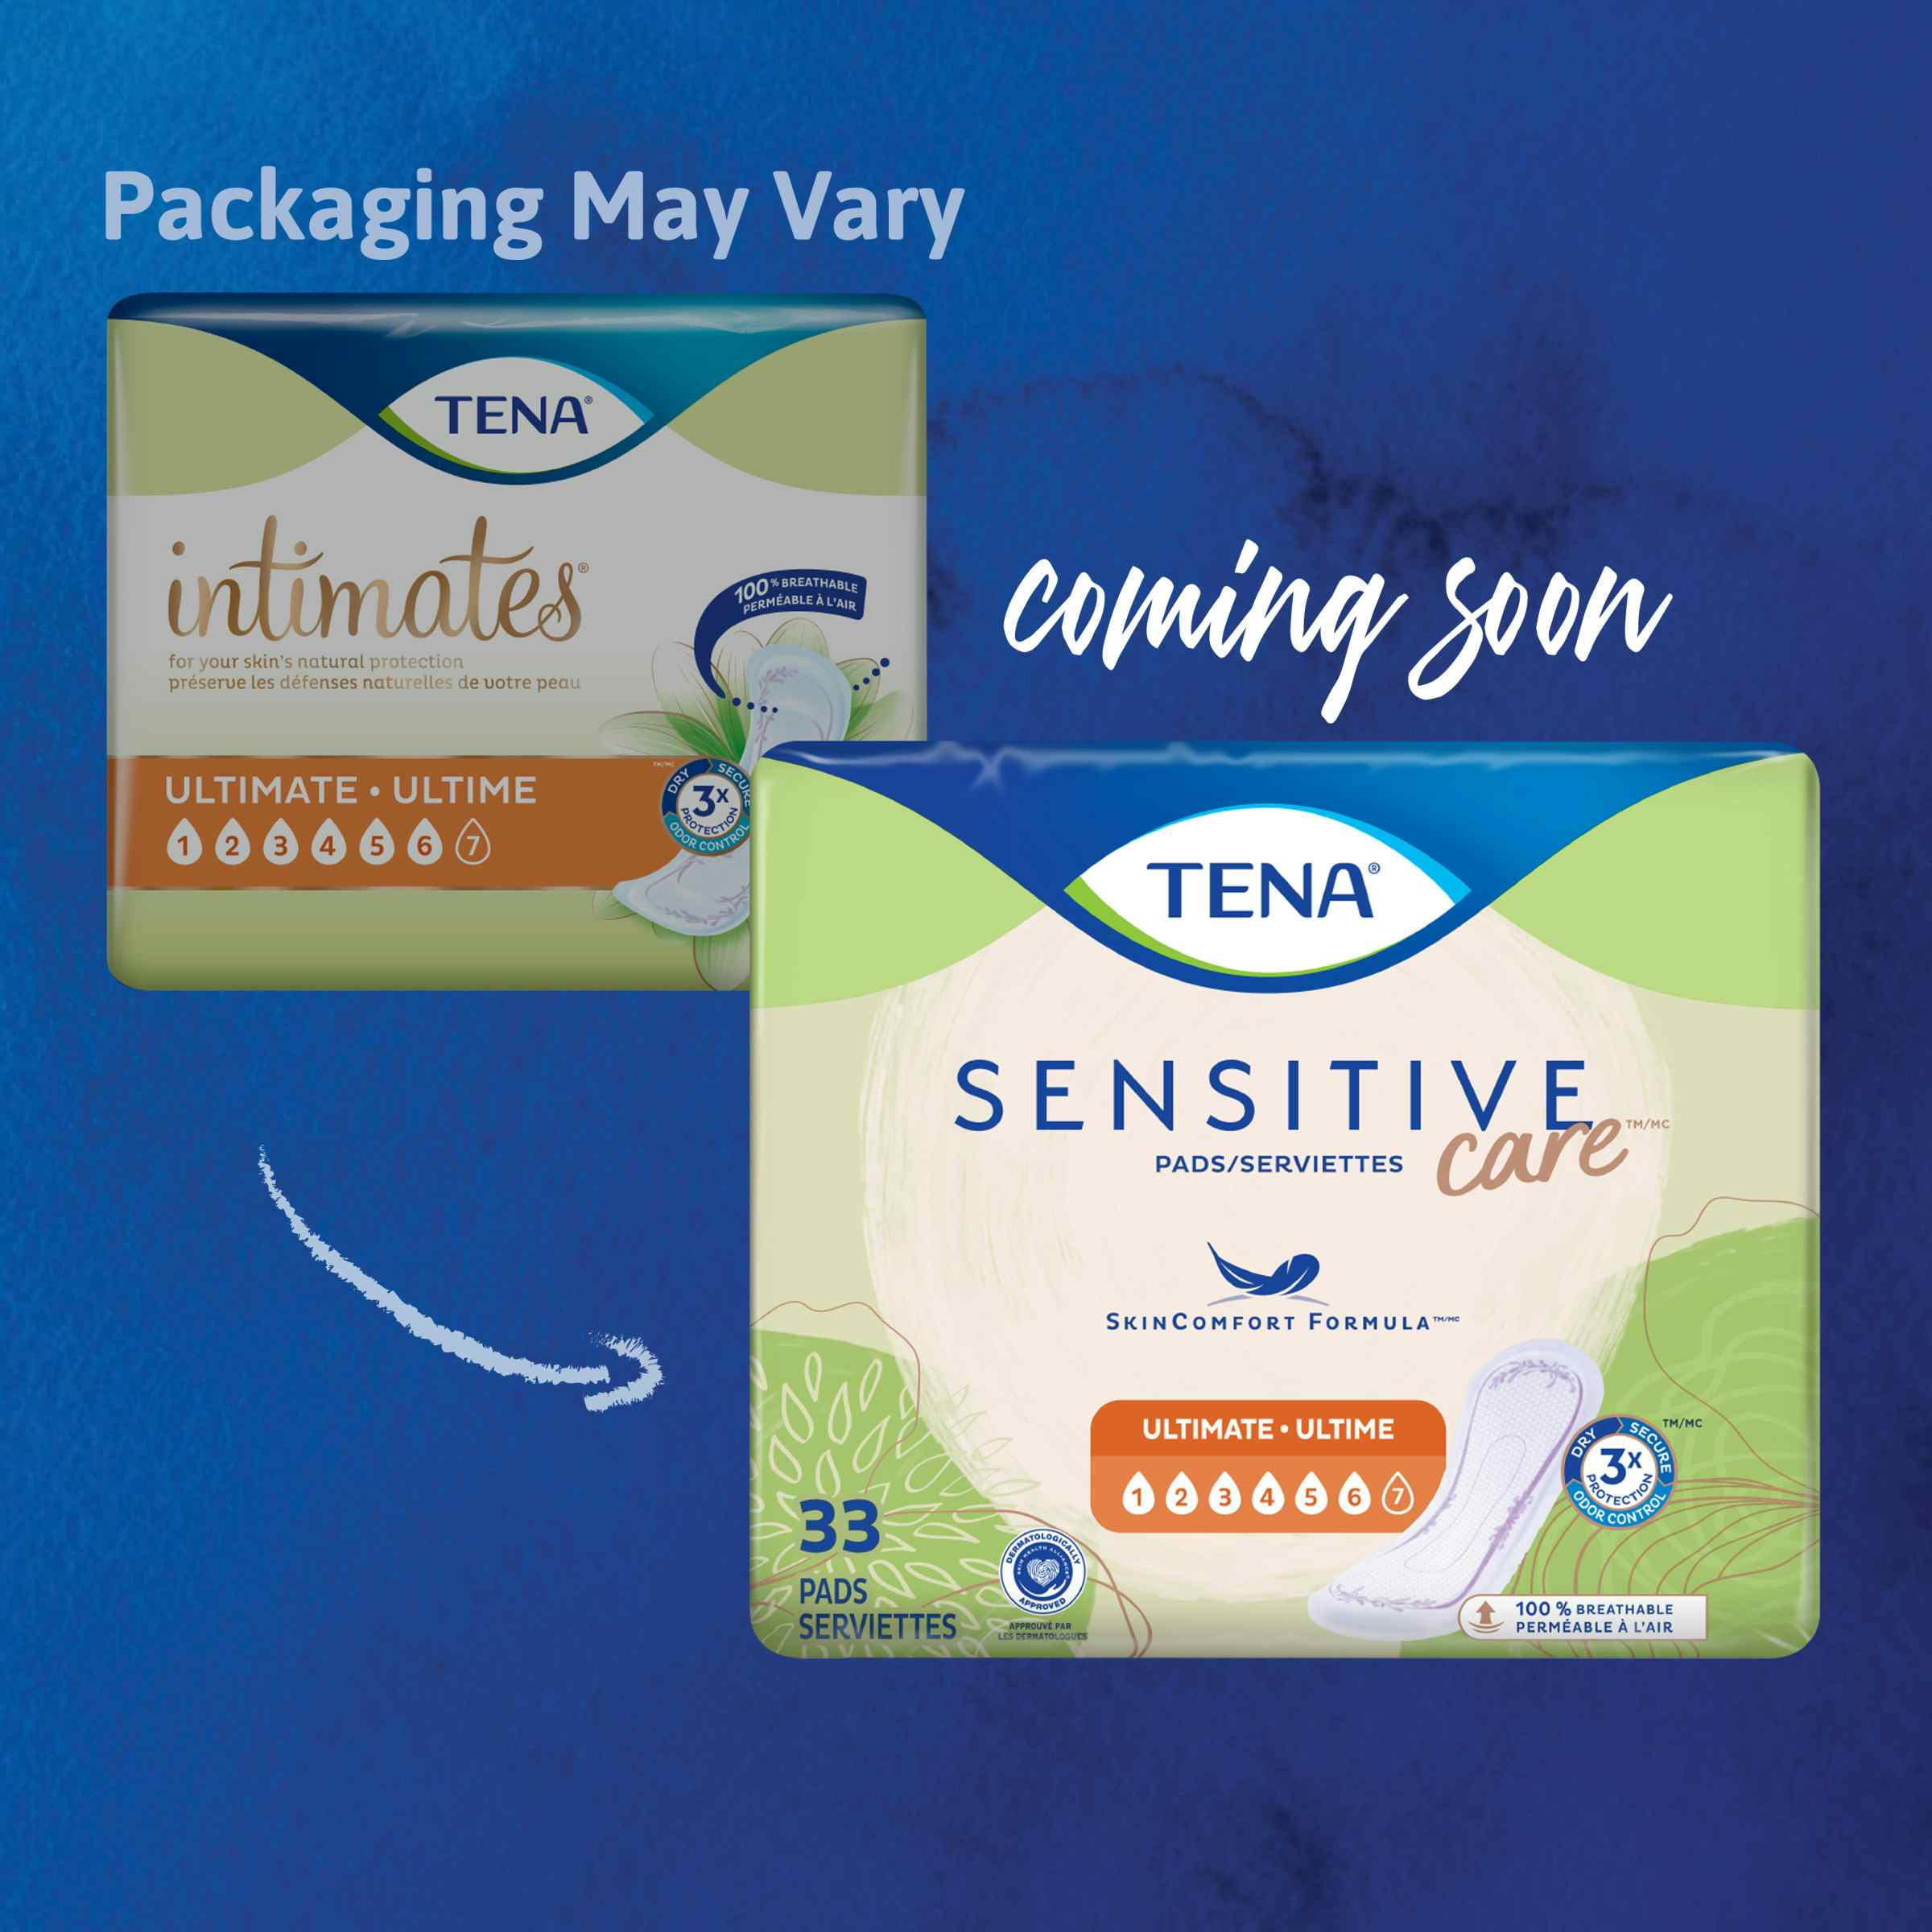 TENA Sensitive Care Ultimate Bladder Pads, Old vs New